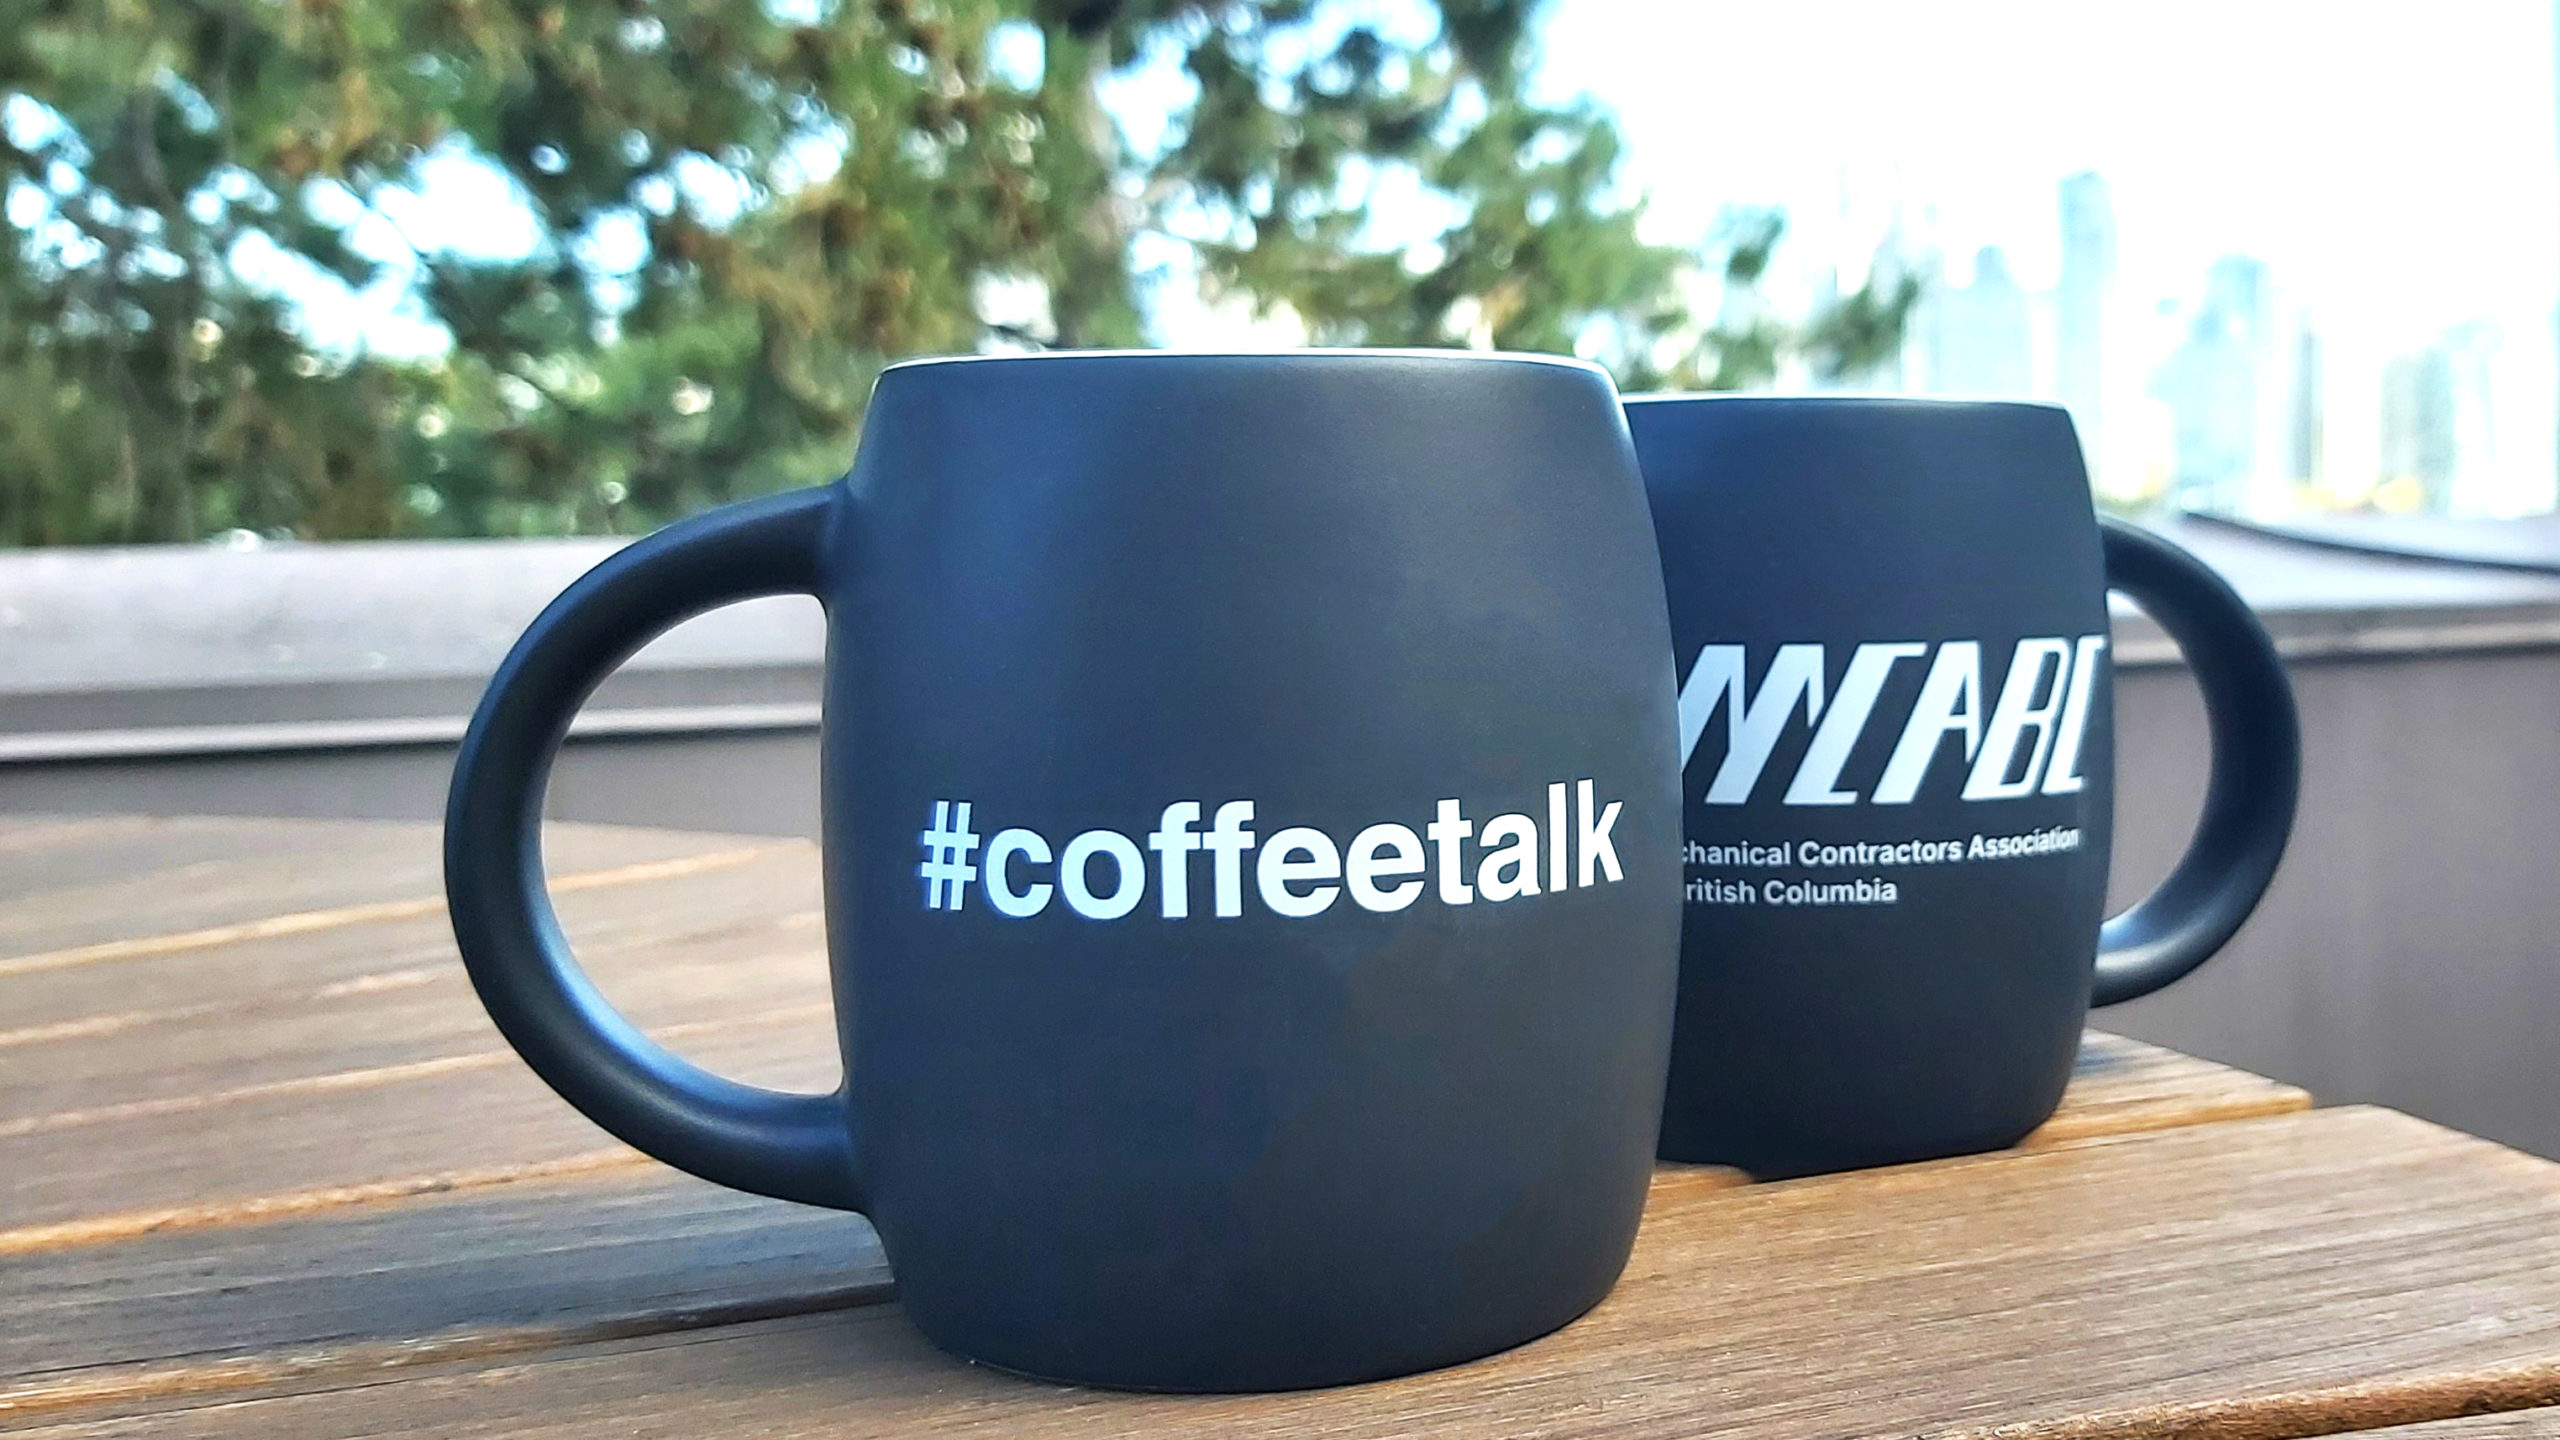 Mechanical Contractors Association of British Columbia Coffee Talk